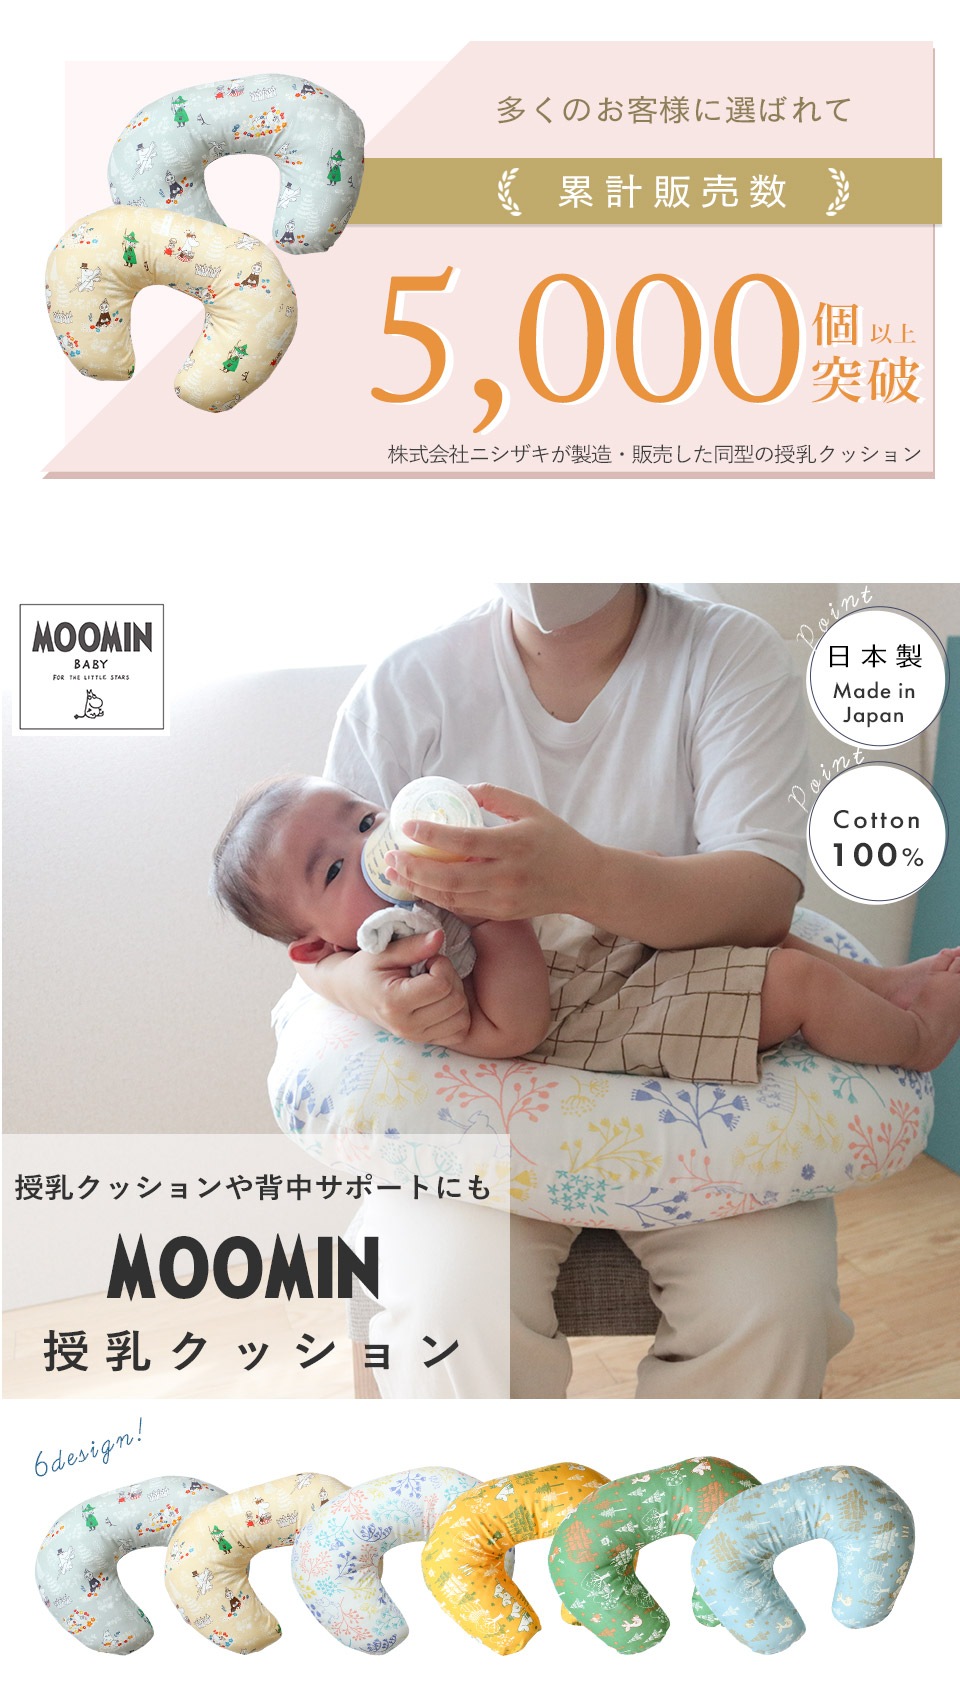 MOOMIN BABY ムーミン 授乳クッション-ベビーのおみせ ミュッケポッケ 公式ショップ